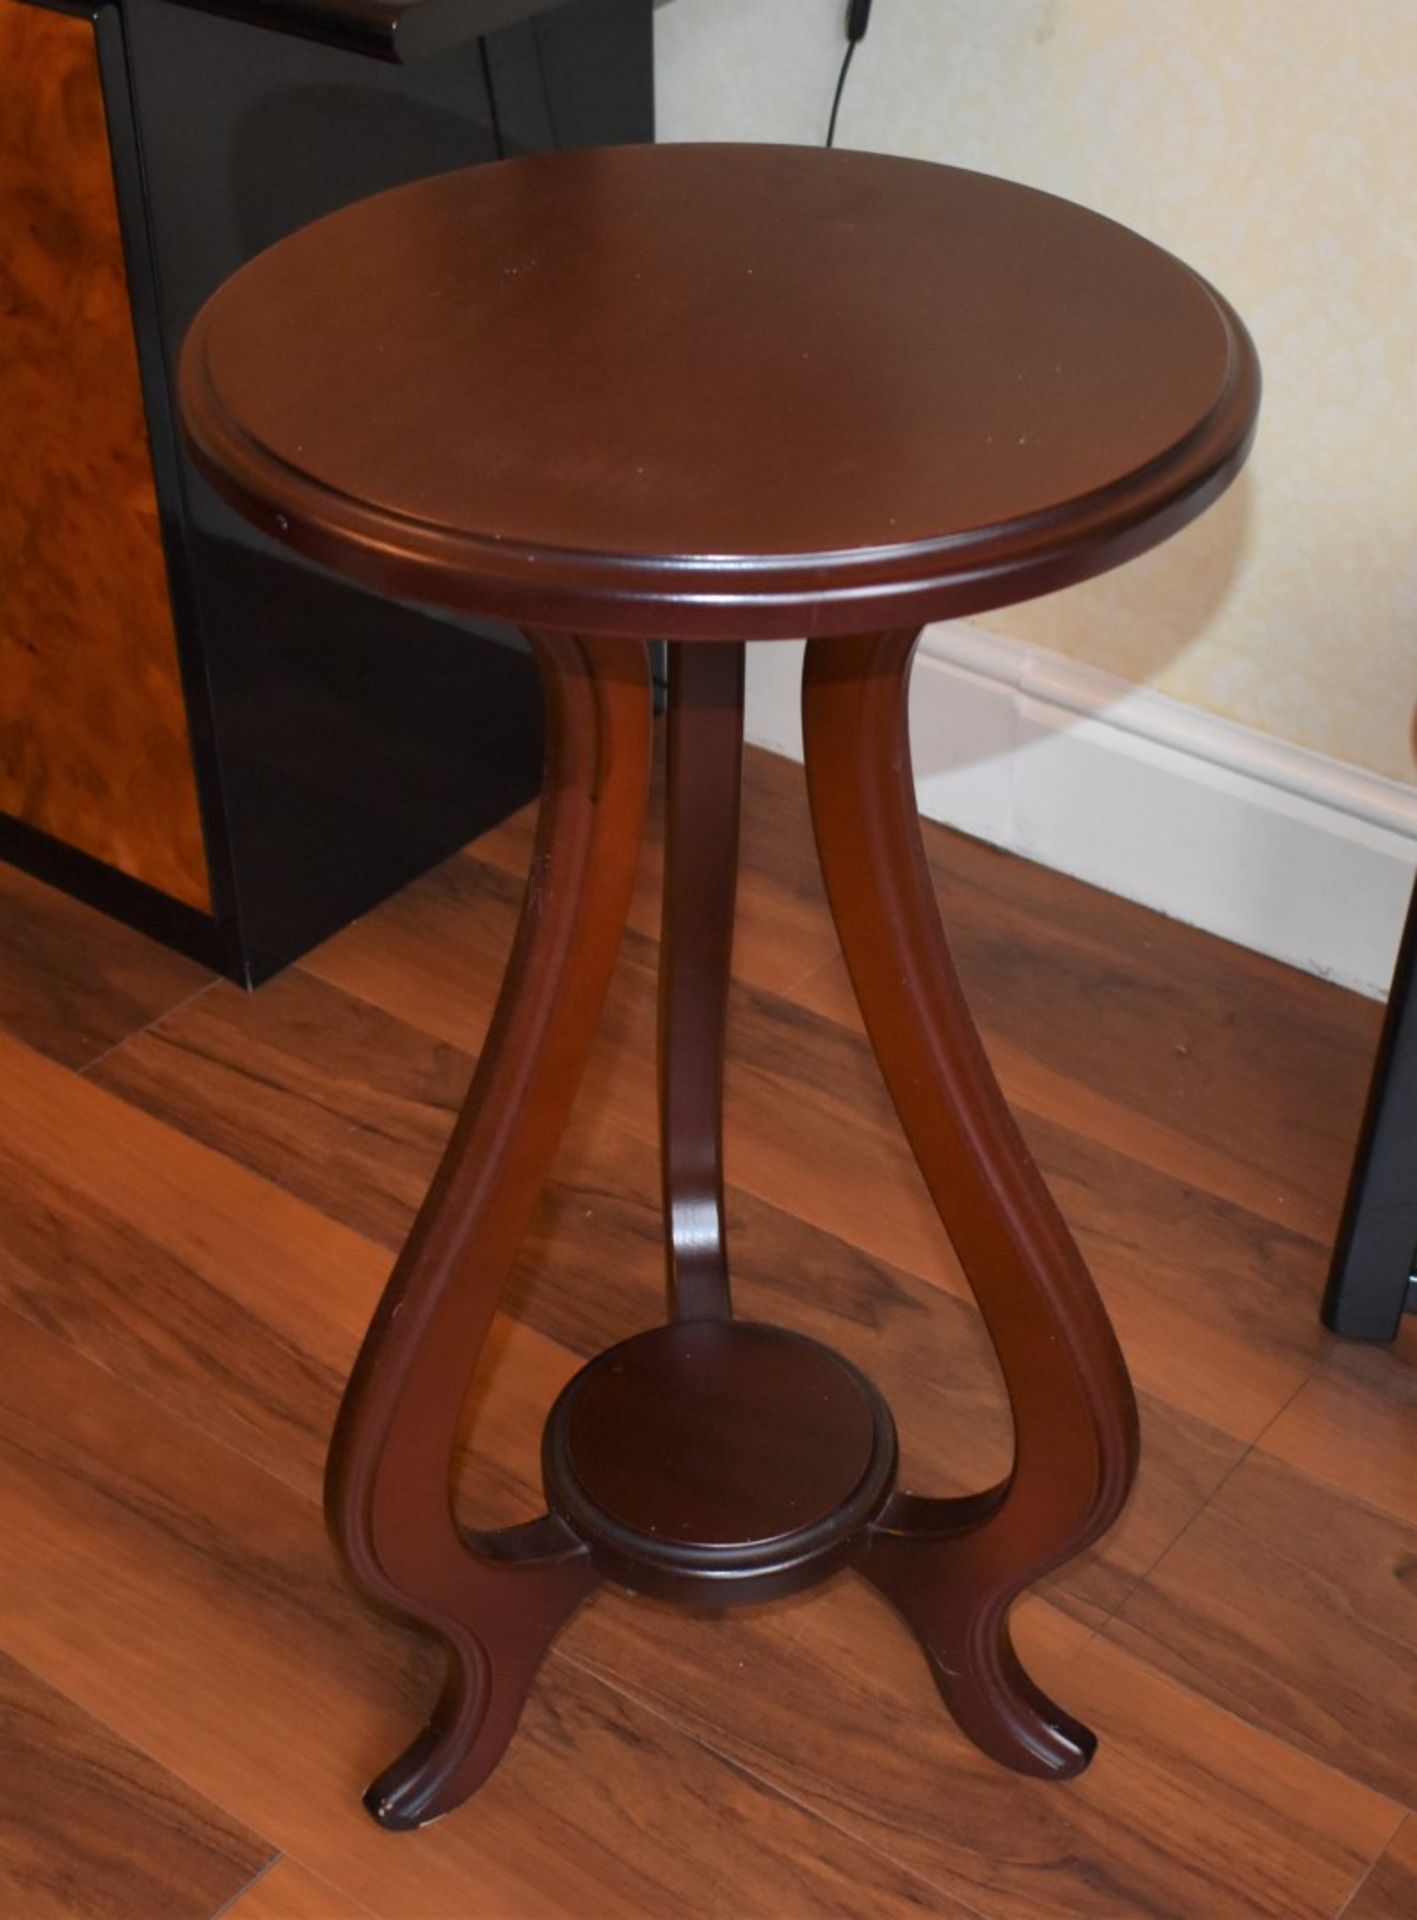 1 x Mahogany Lamp / Vase Table With Elegant Triple Leg Base and Undershelf - Dimensions H75 x W37 - Image 4 of 5